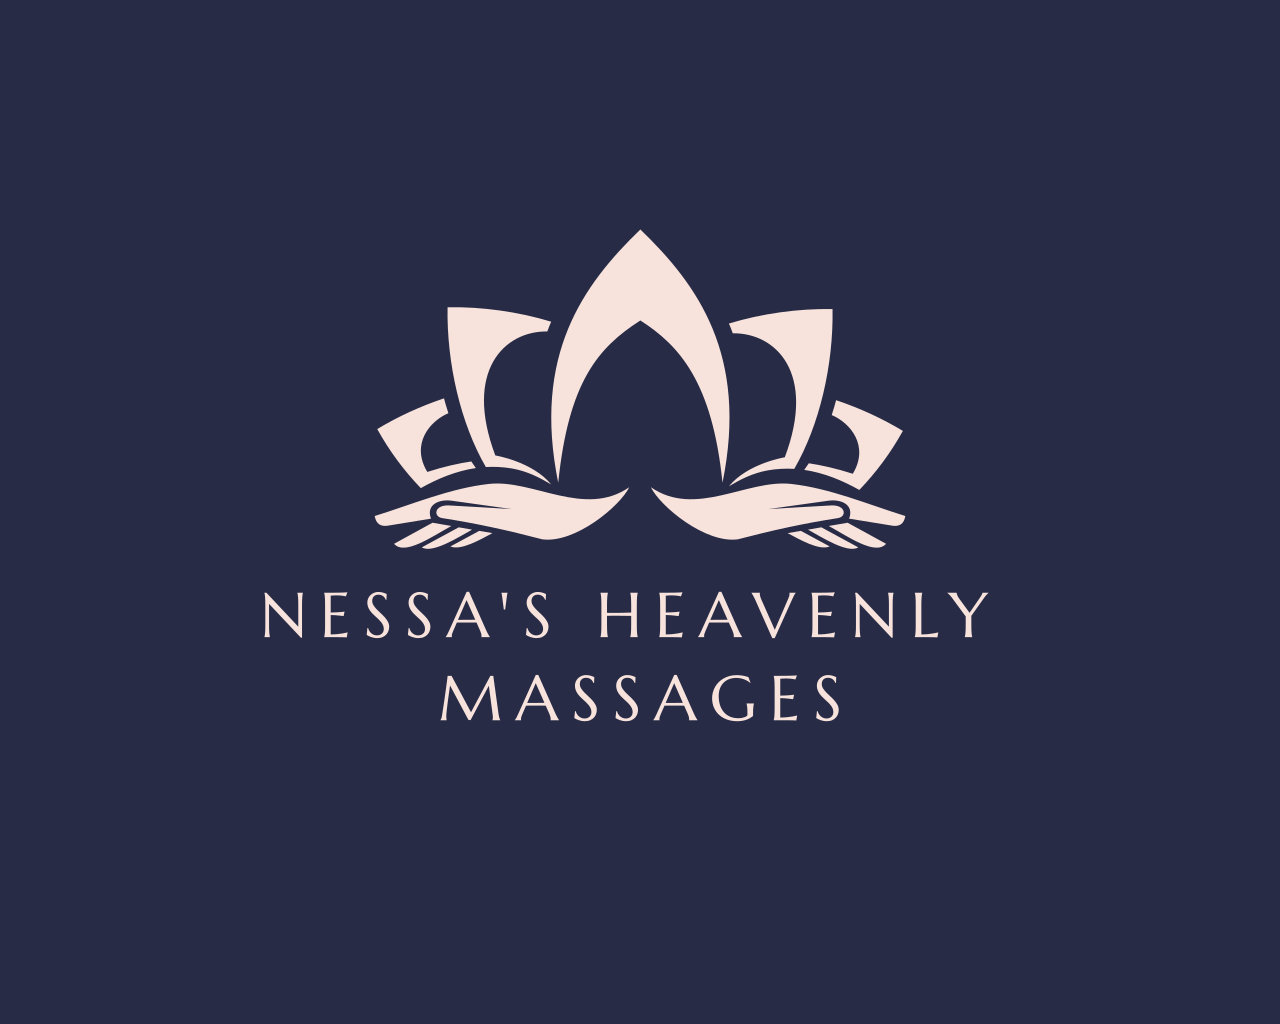 NESSA'S HEAVENLY MASSAGES's logo